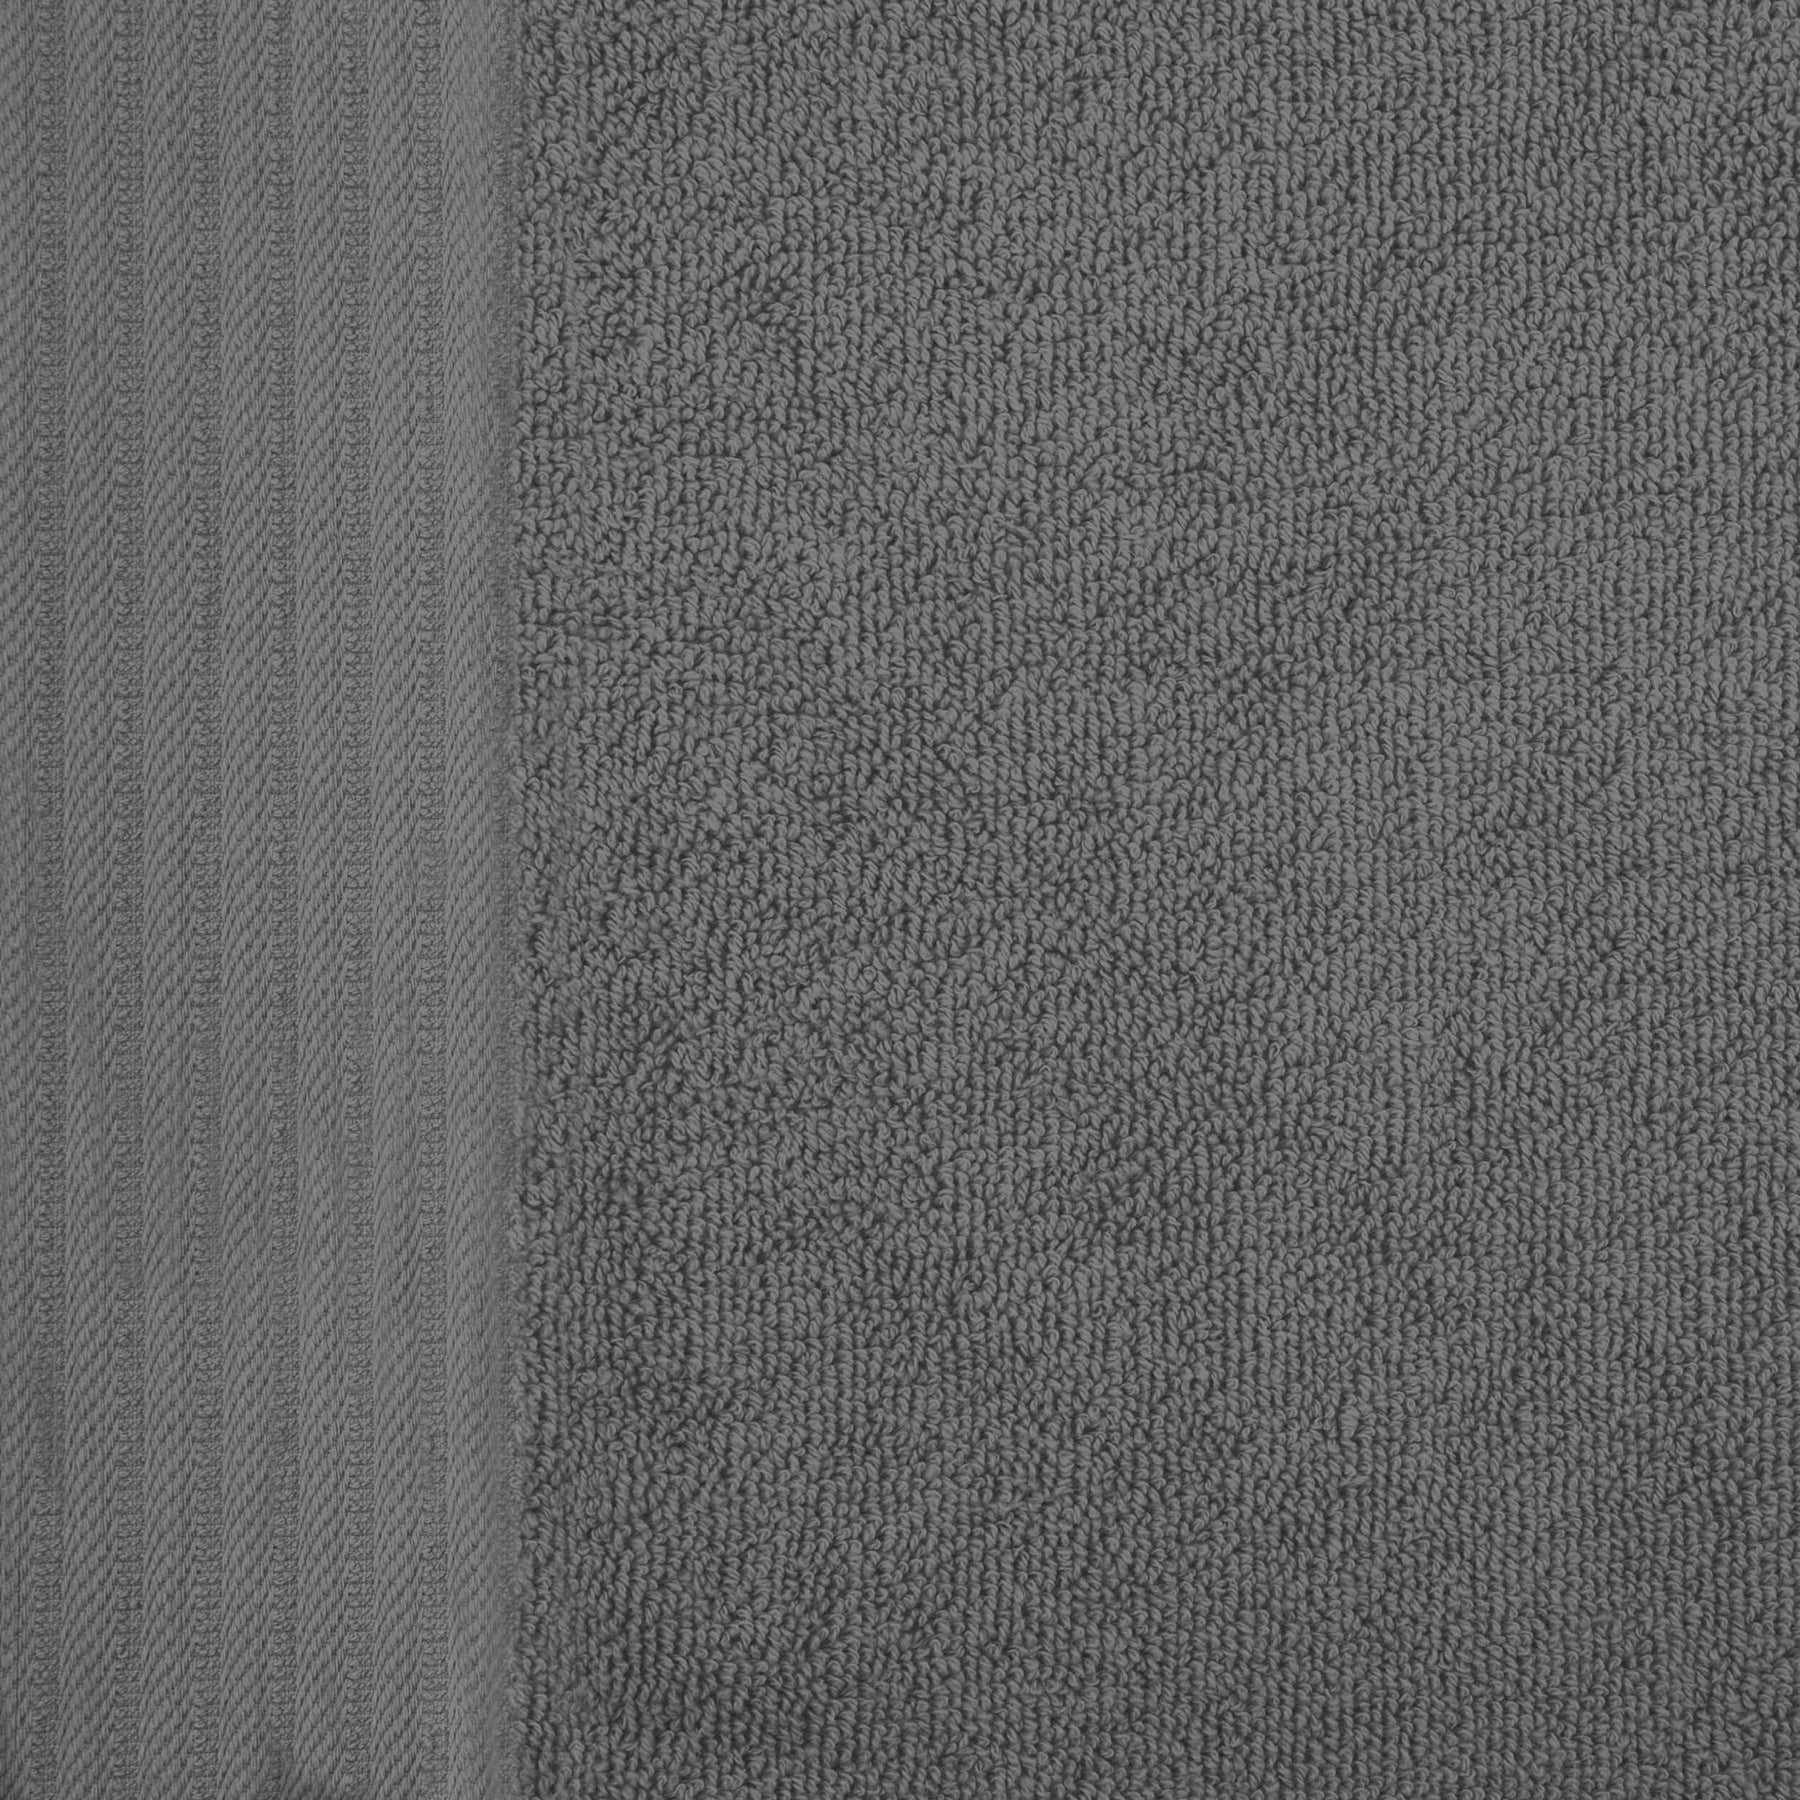 Premium Turkish Cotton Herringbone Solid Assorted 6-Piece Towel Set - Grey